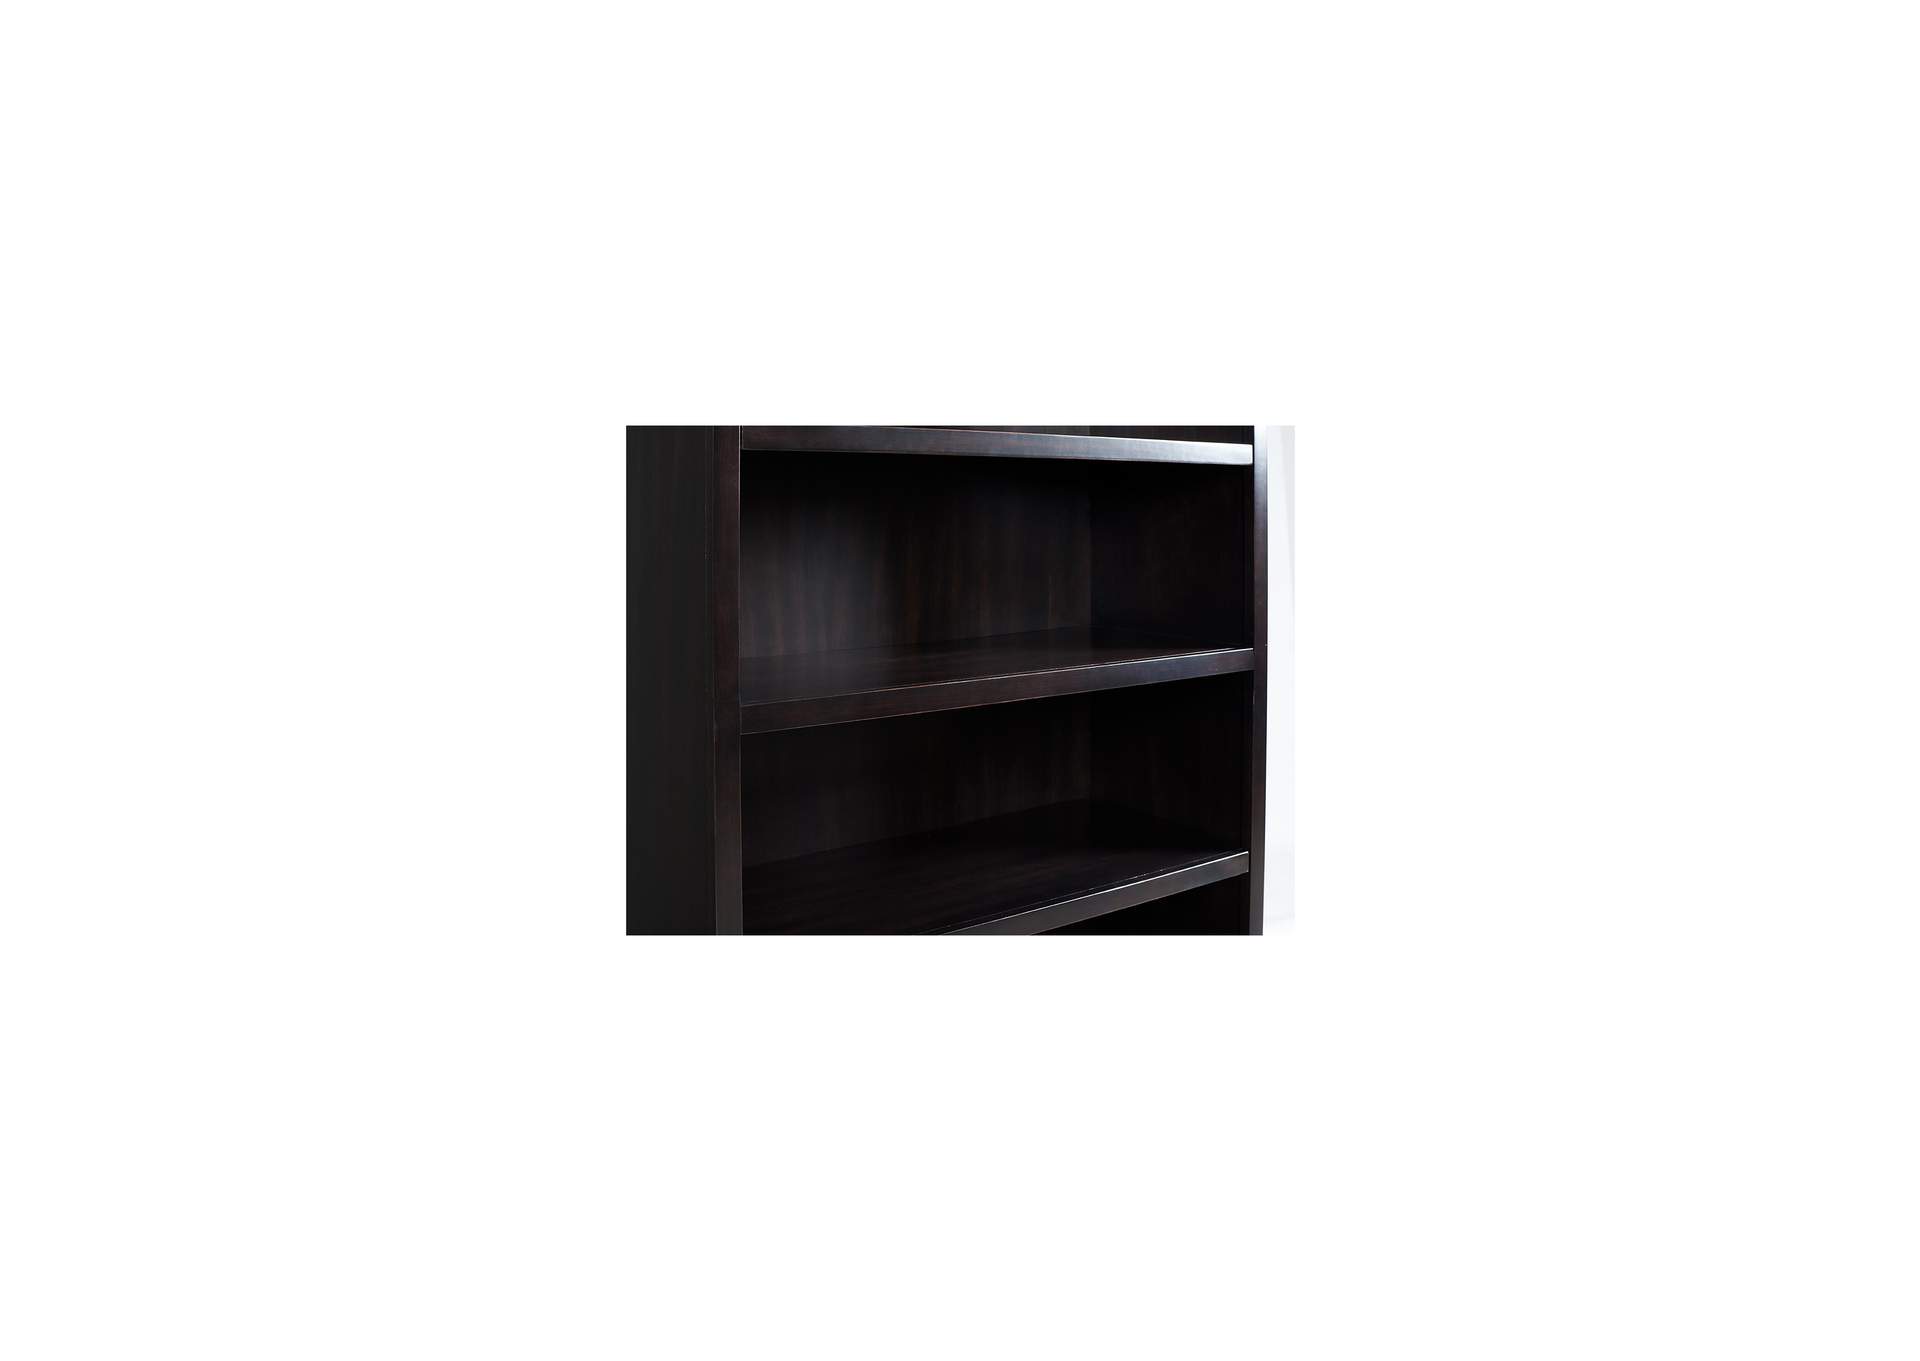 Clinton Hill Kohl Black Drawer Bookcase,Riverside